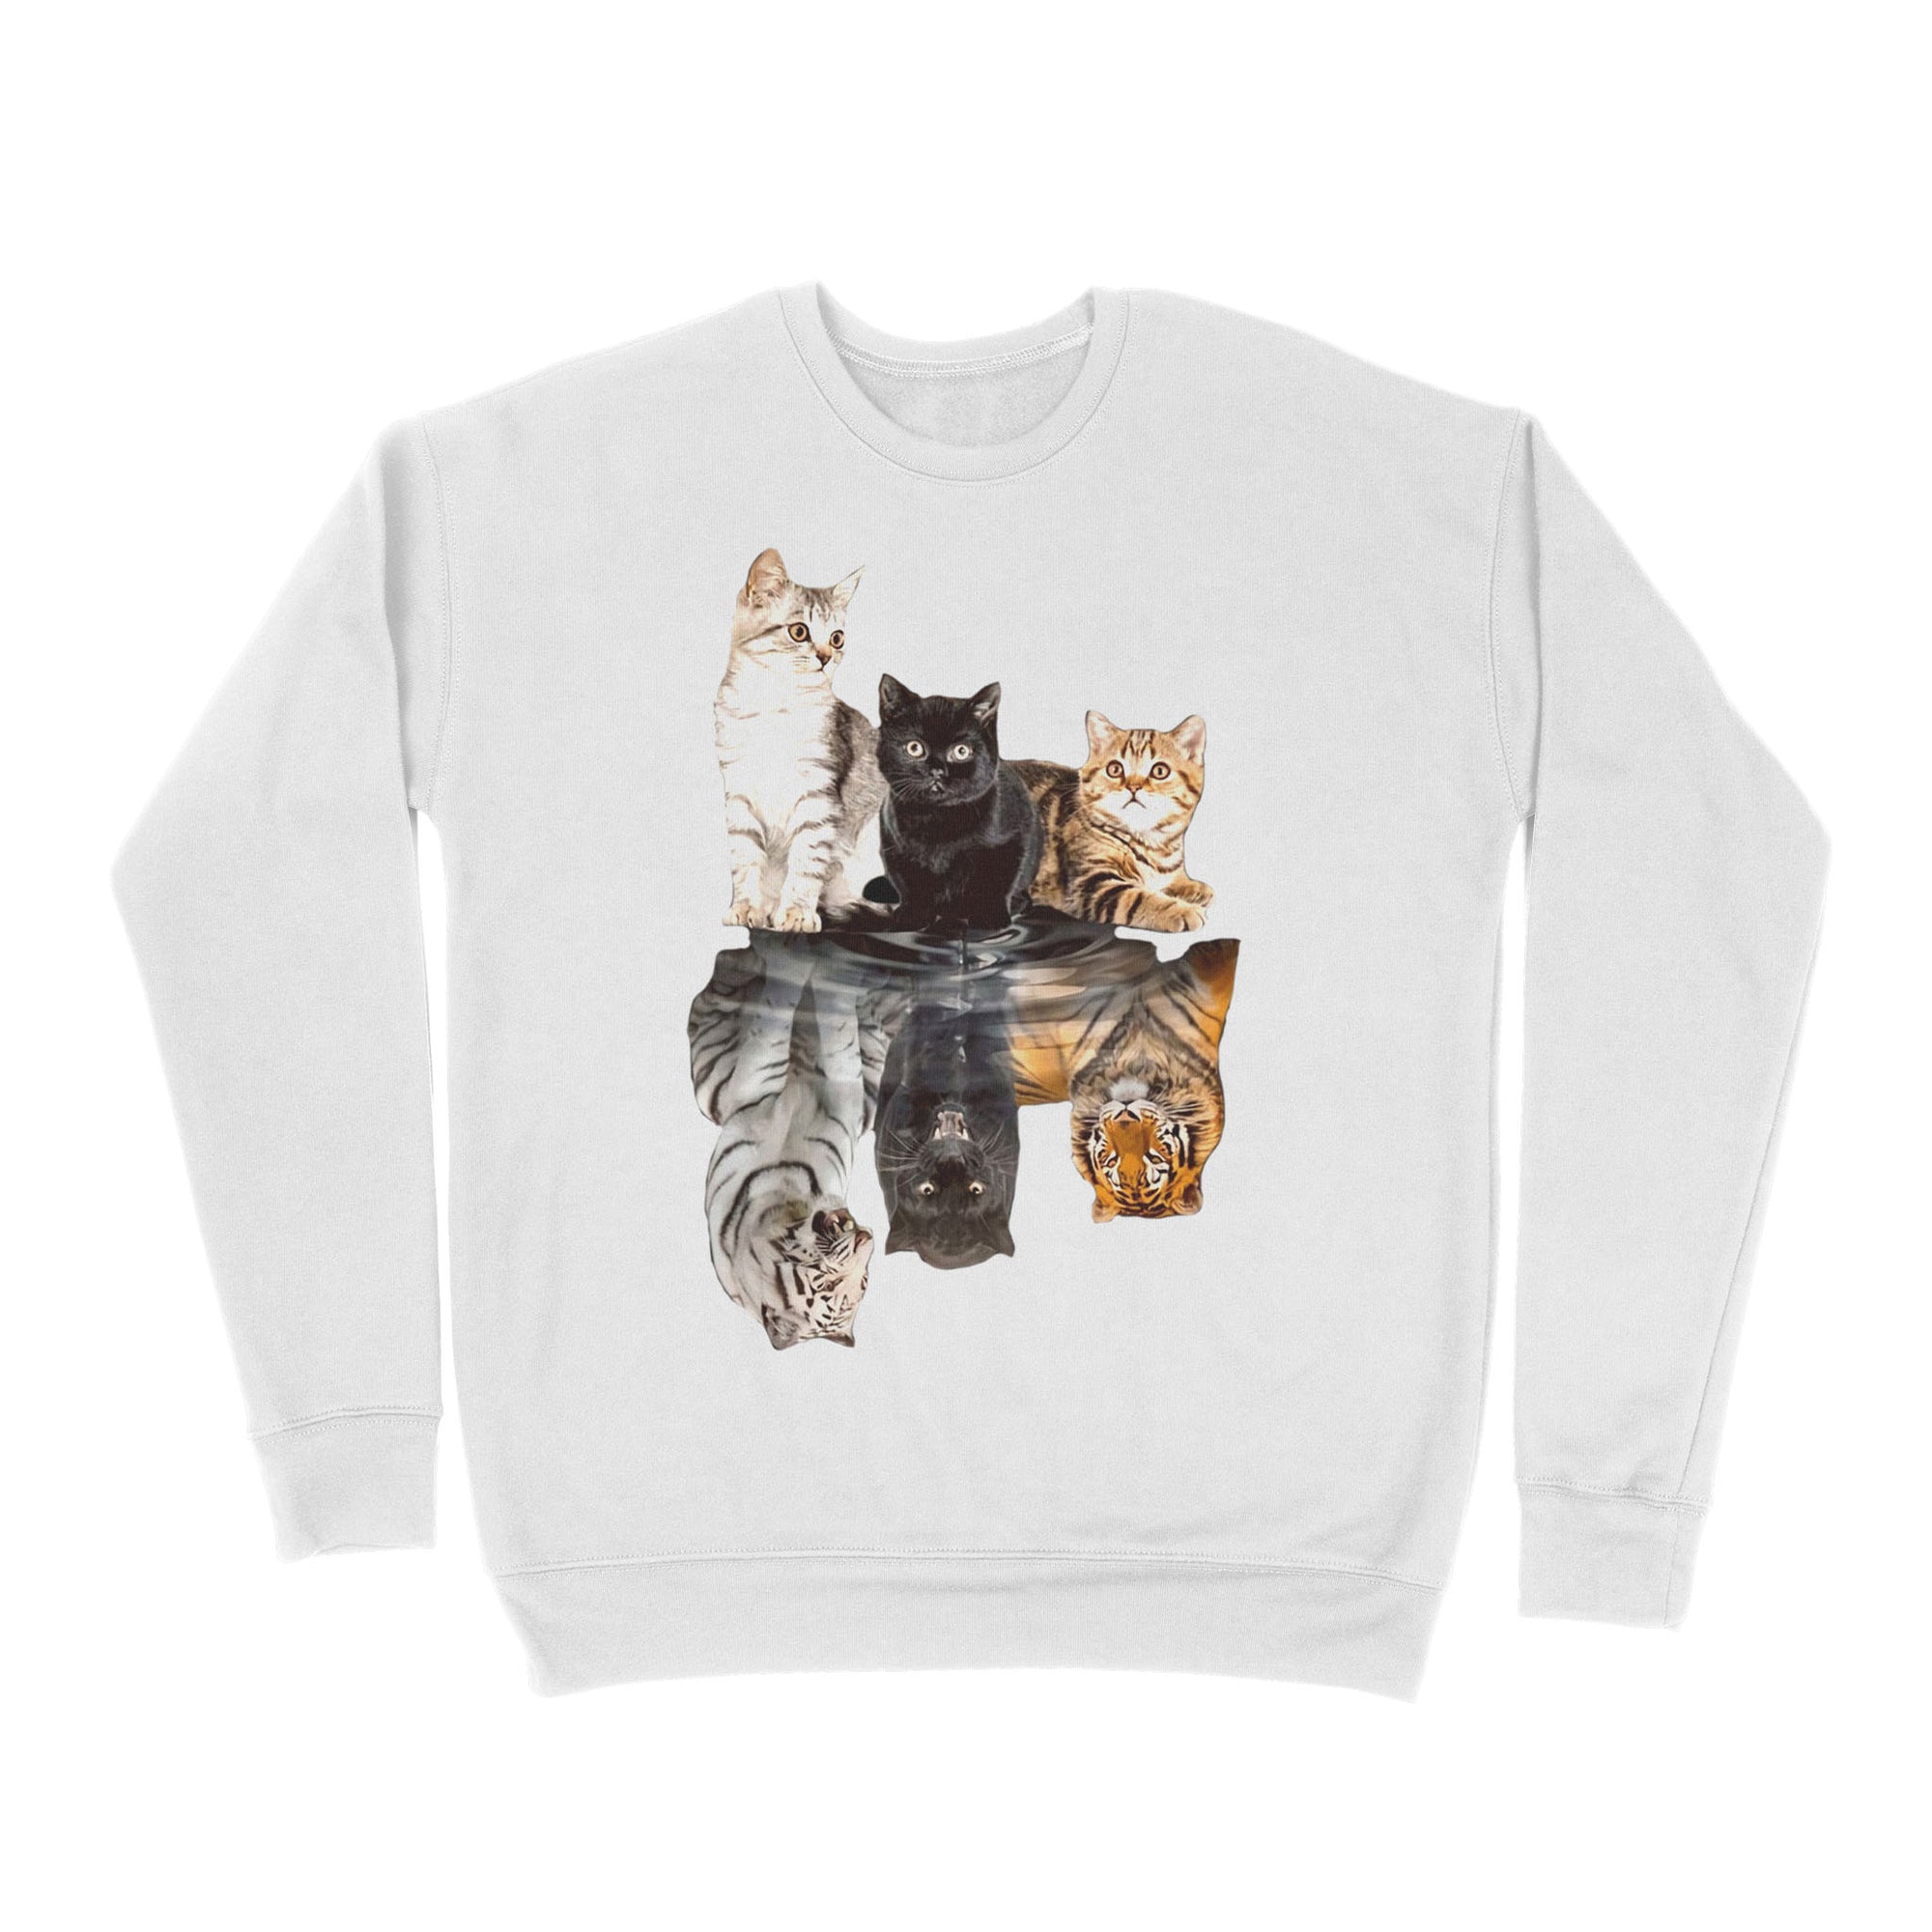 Premium Crew Neck Sweatshirt - The Cats Water Mirror Reflection Tigers